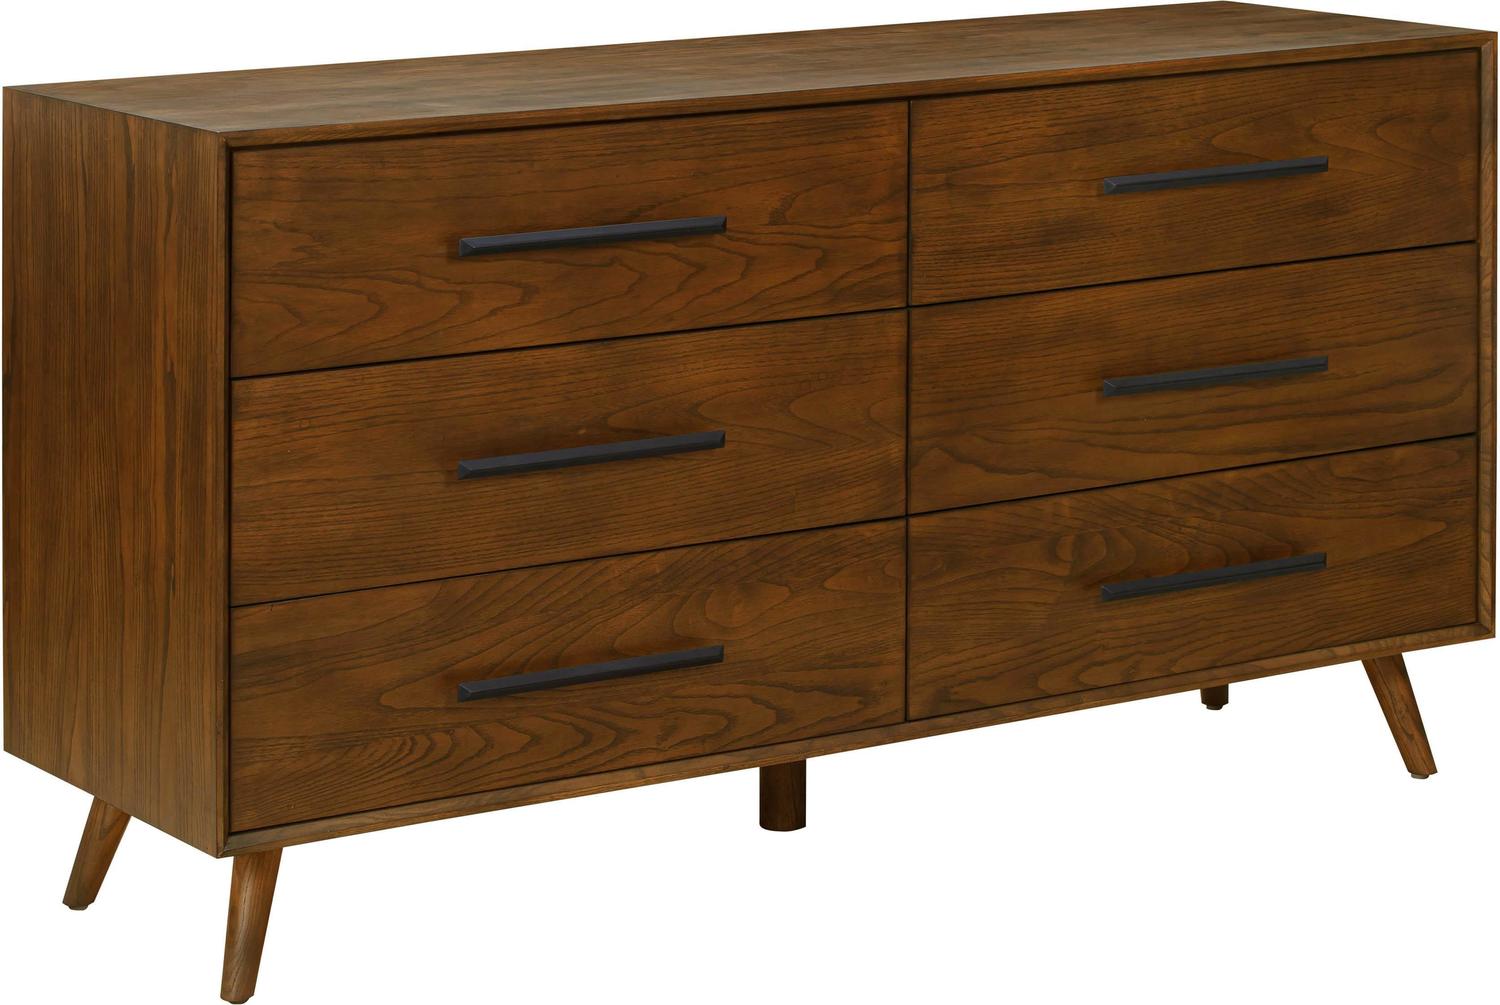  Tov Furniture Dressers Bedroom Chests and Dressers Walnut